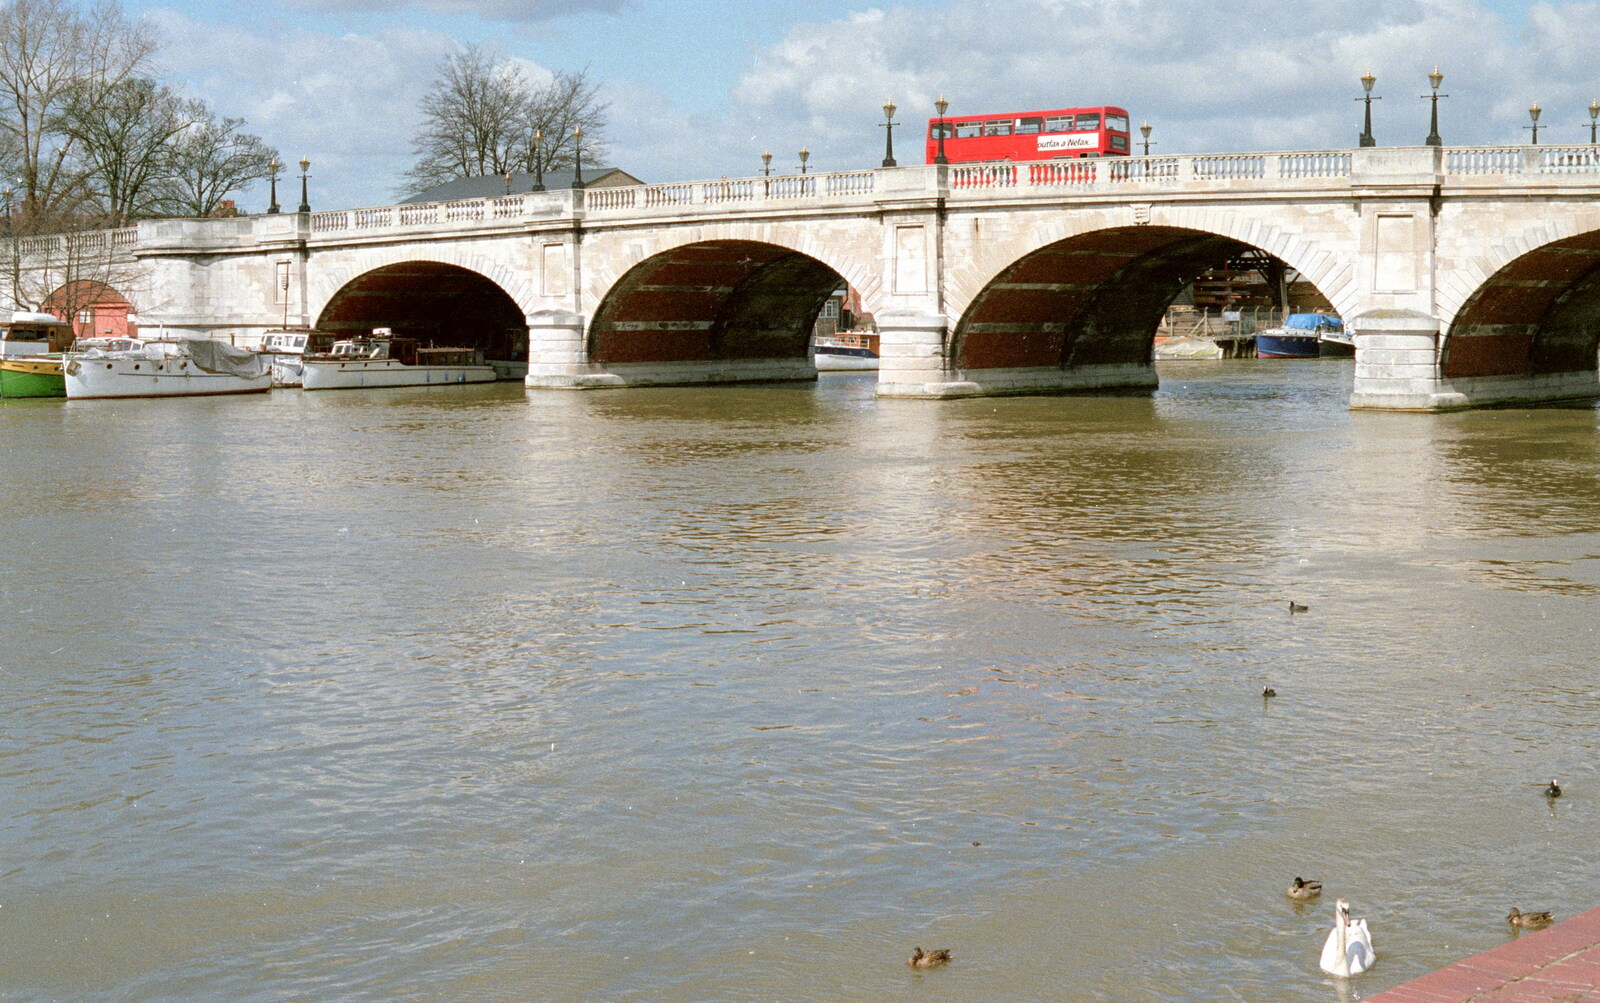 Kingston Bridge over the Thames from Trotsky's Birthday, New Malden, Kingston Upon Thames - 20th April 1986